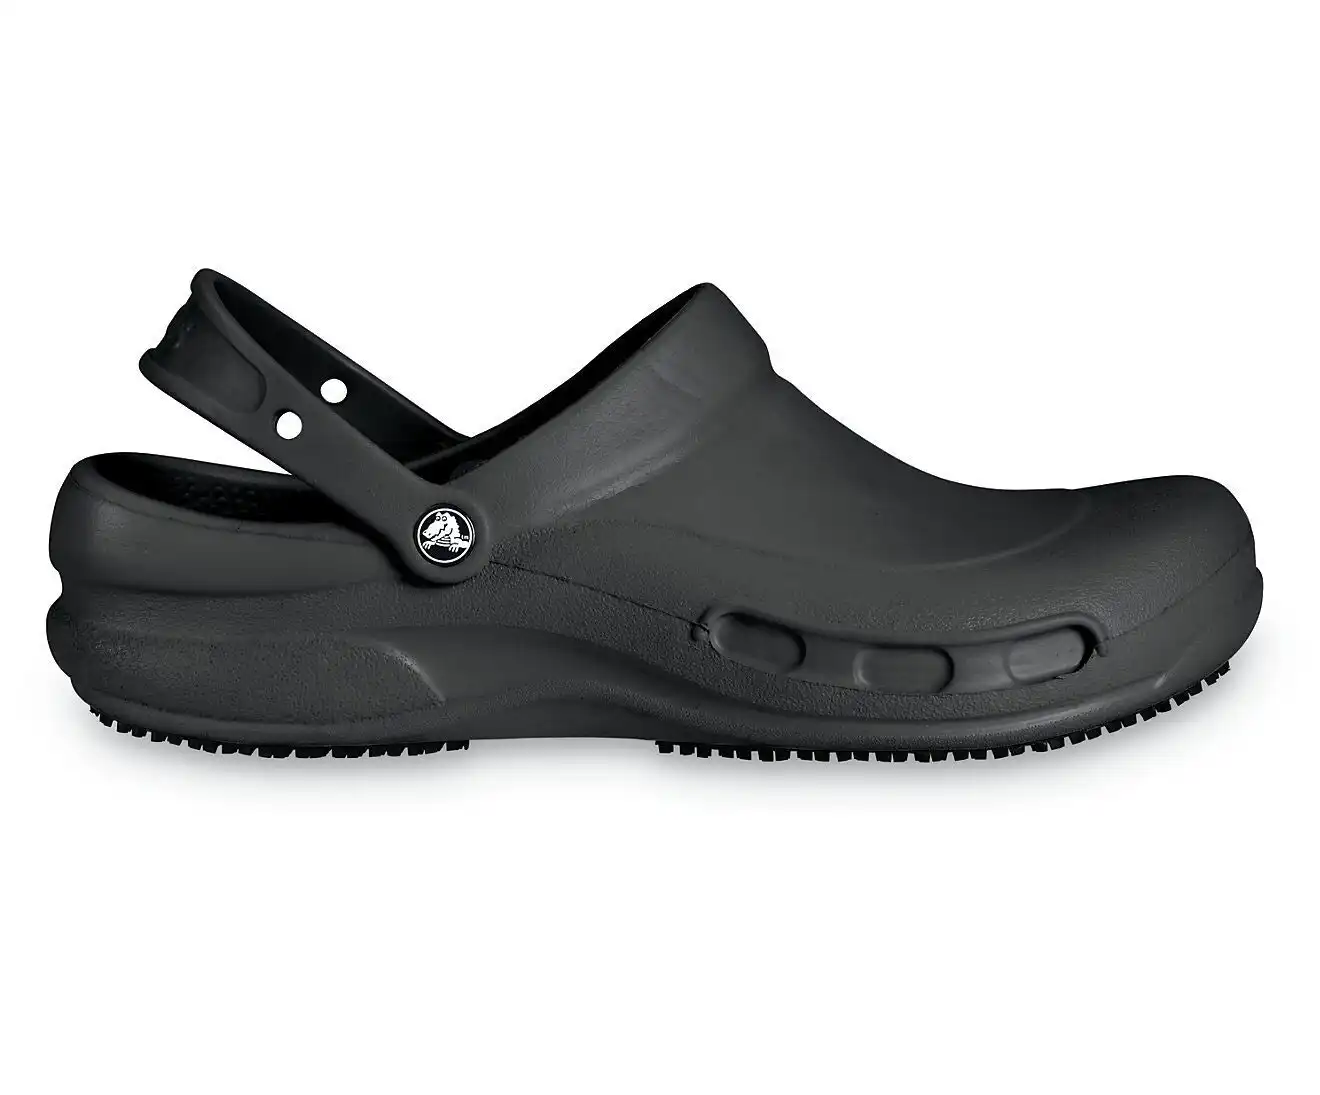 Crocs Bistro Slip Resistant Clogs Shoes Sandals Work Occupational - Black